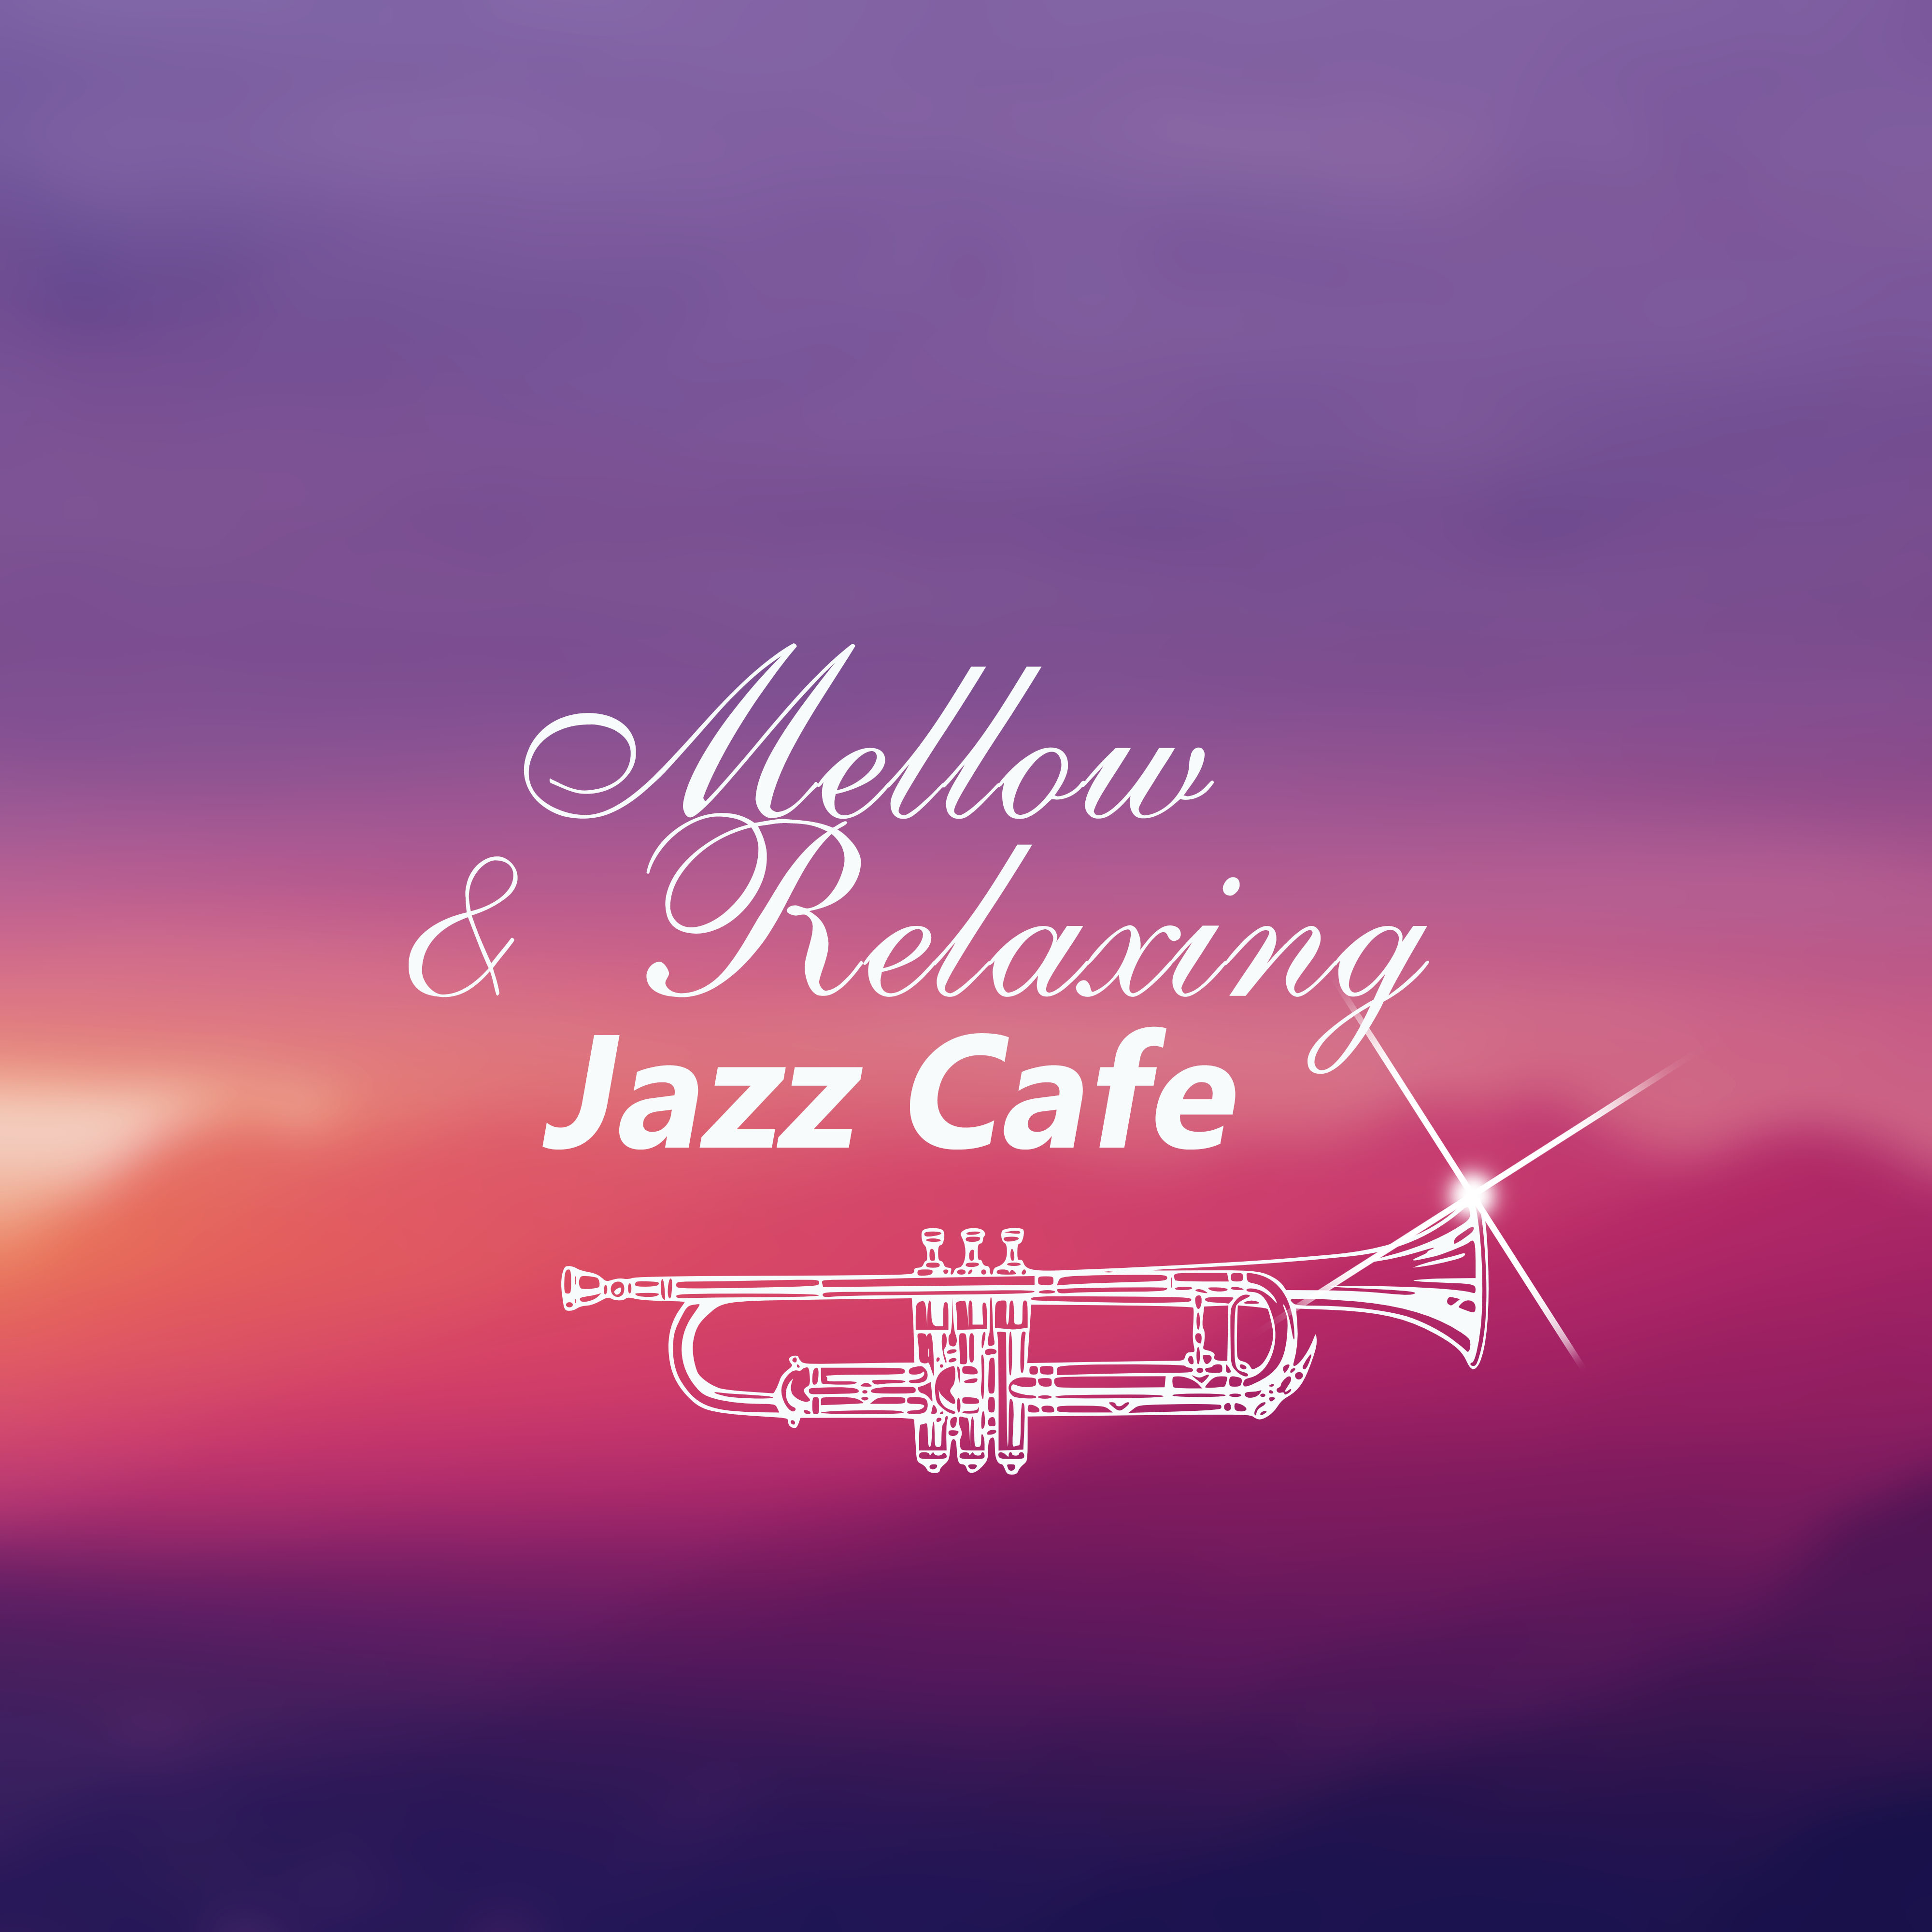 Mellow & Relaxing Jazz Cafe – Monday Morning, Sweet Awakening with Jazz Music, Time to Breakfast, Piano Lounge